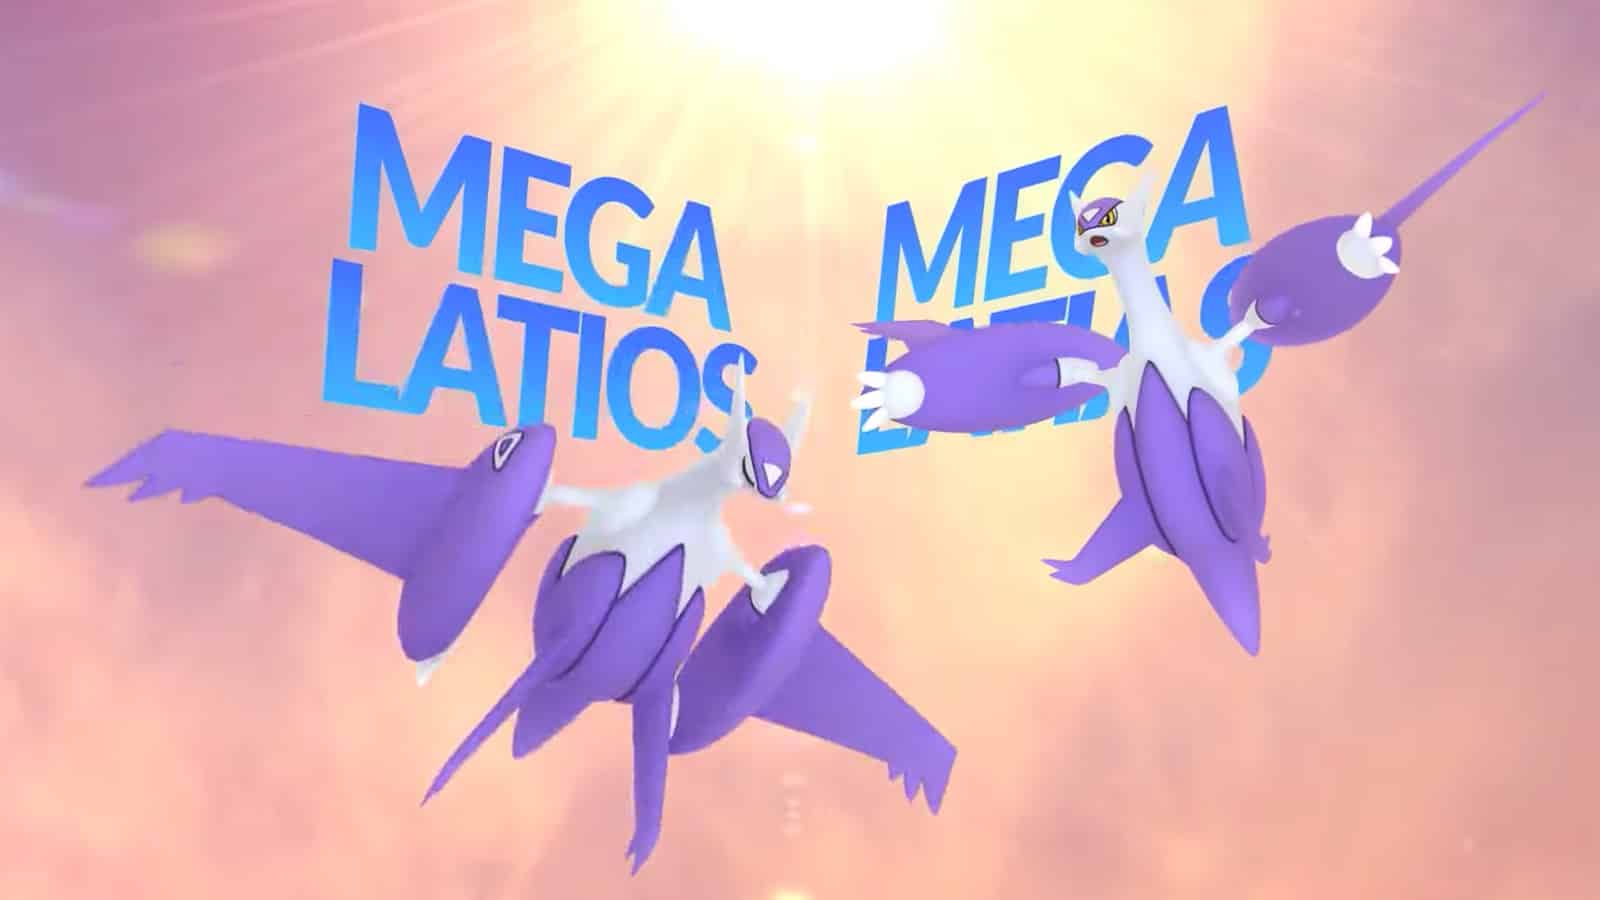 Mega Latios and Mega Latias appearing in Pokemon Go